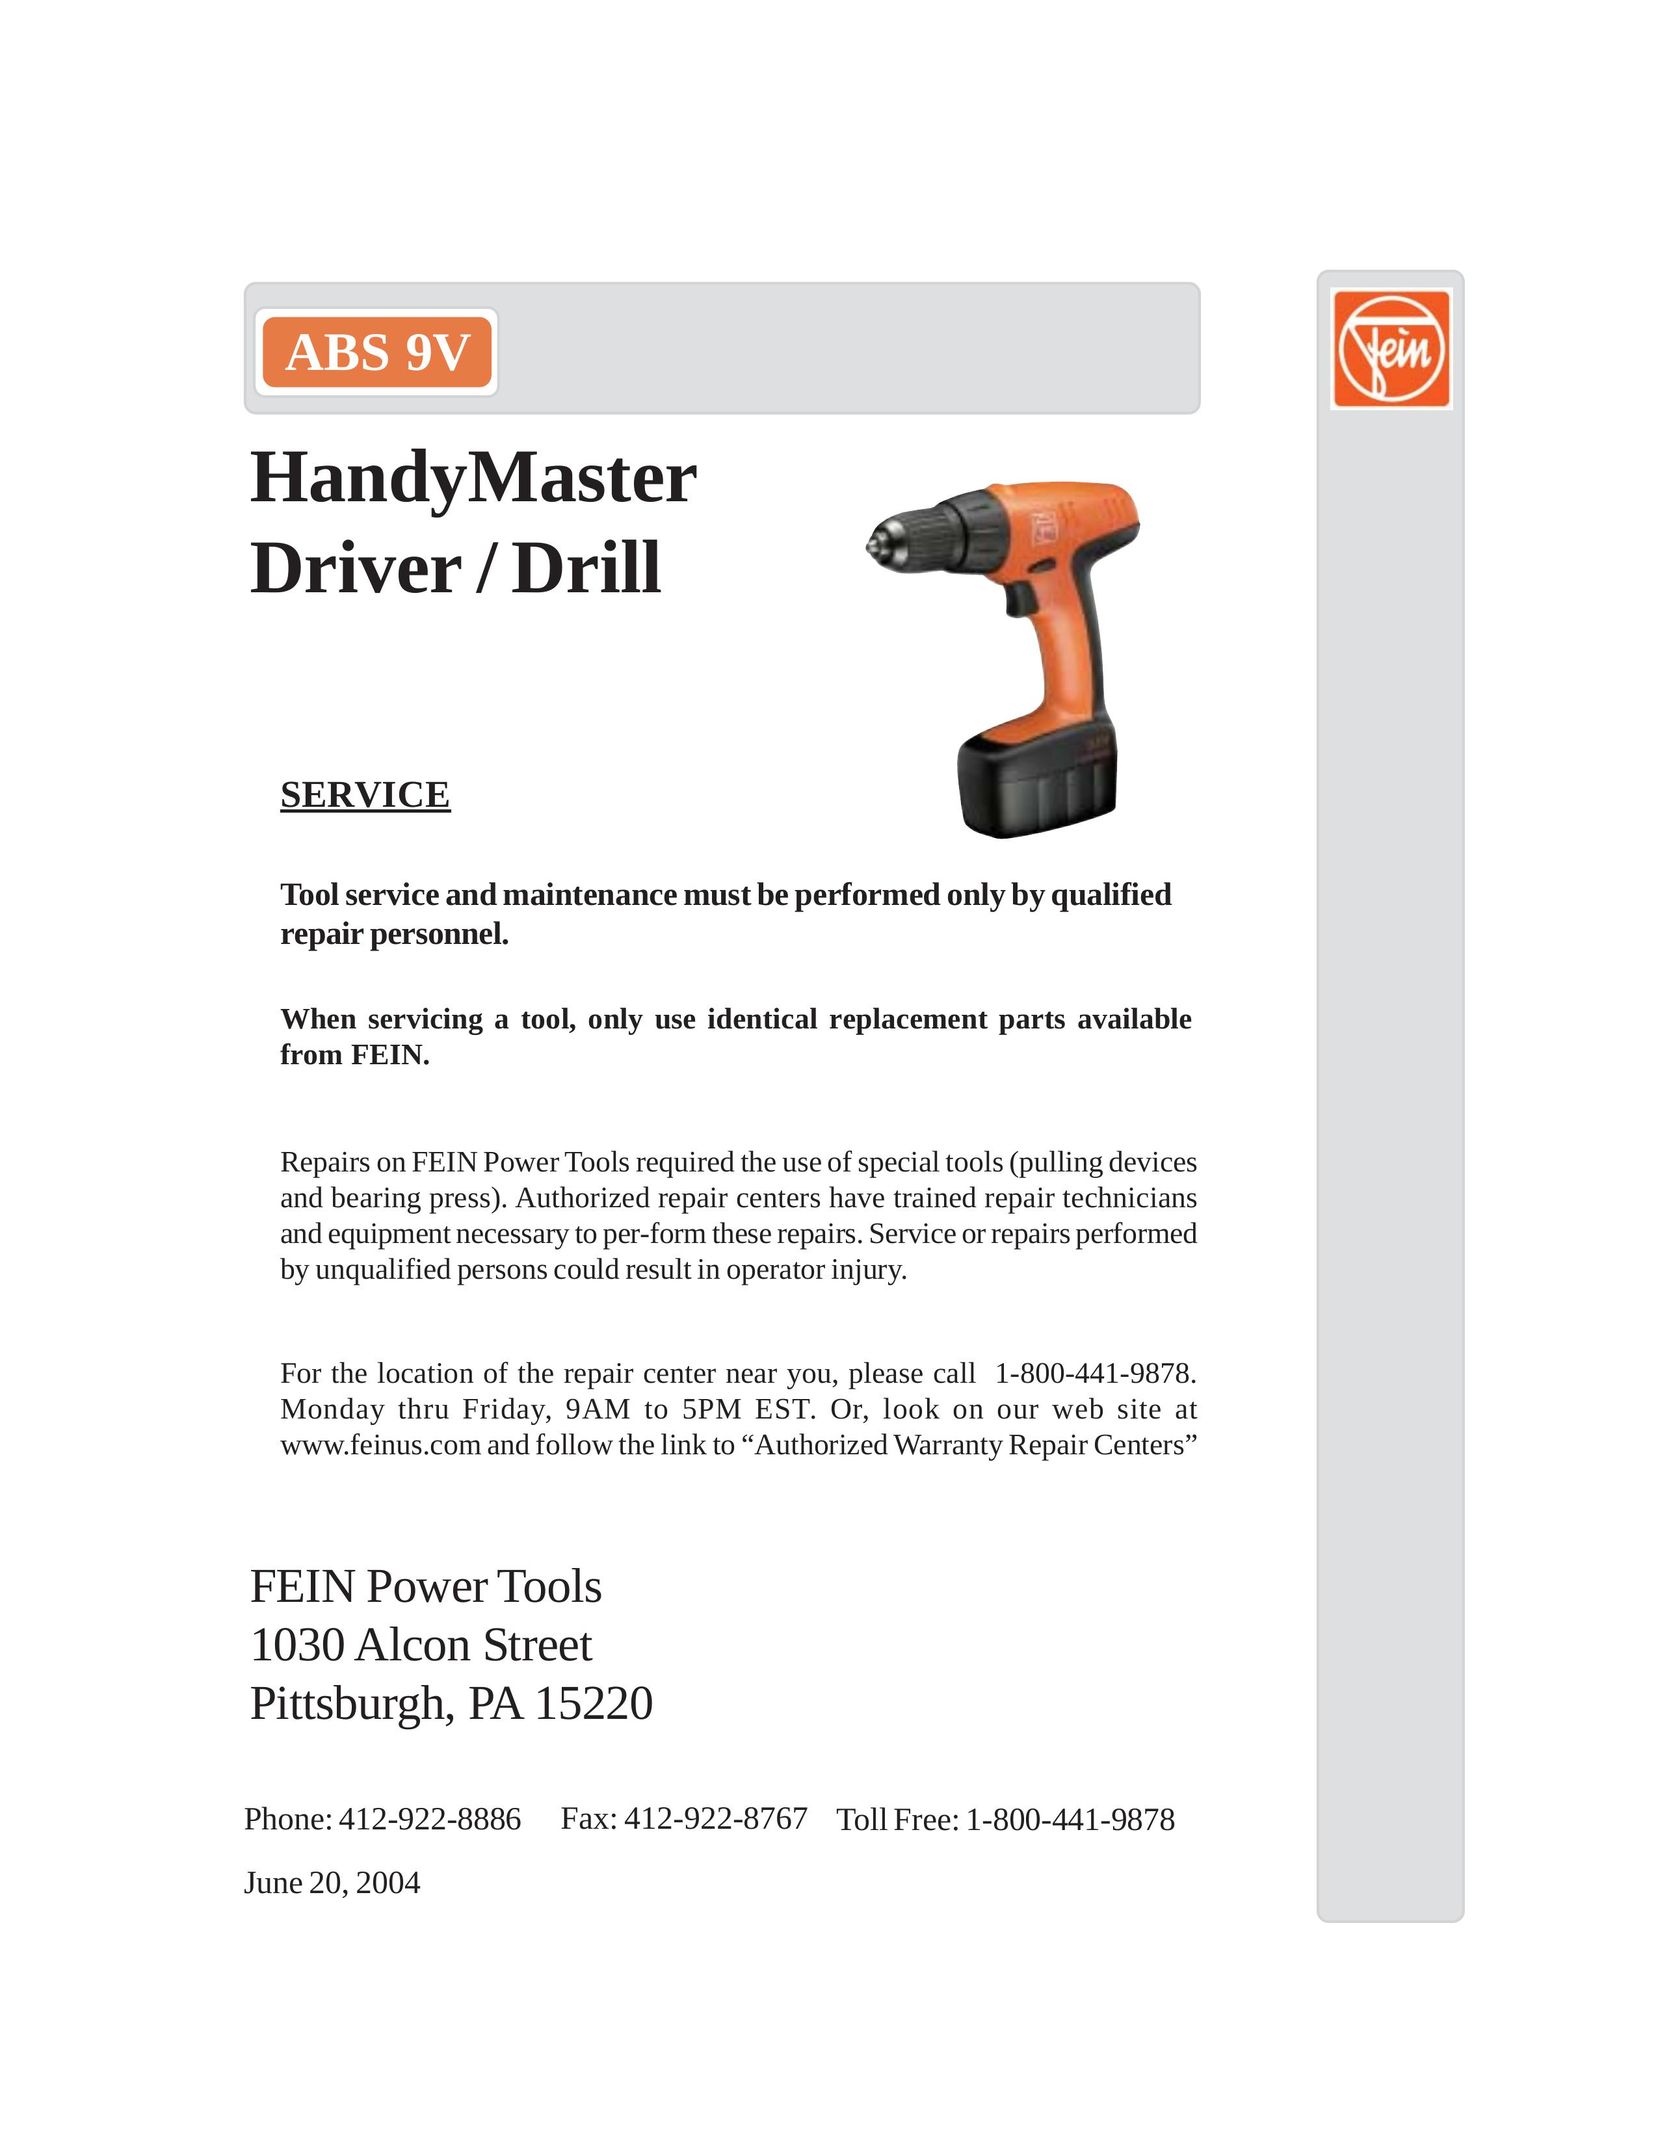 FEIN Power Tools ABS 9V Drill User Manual